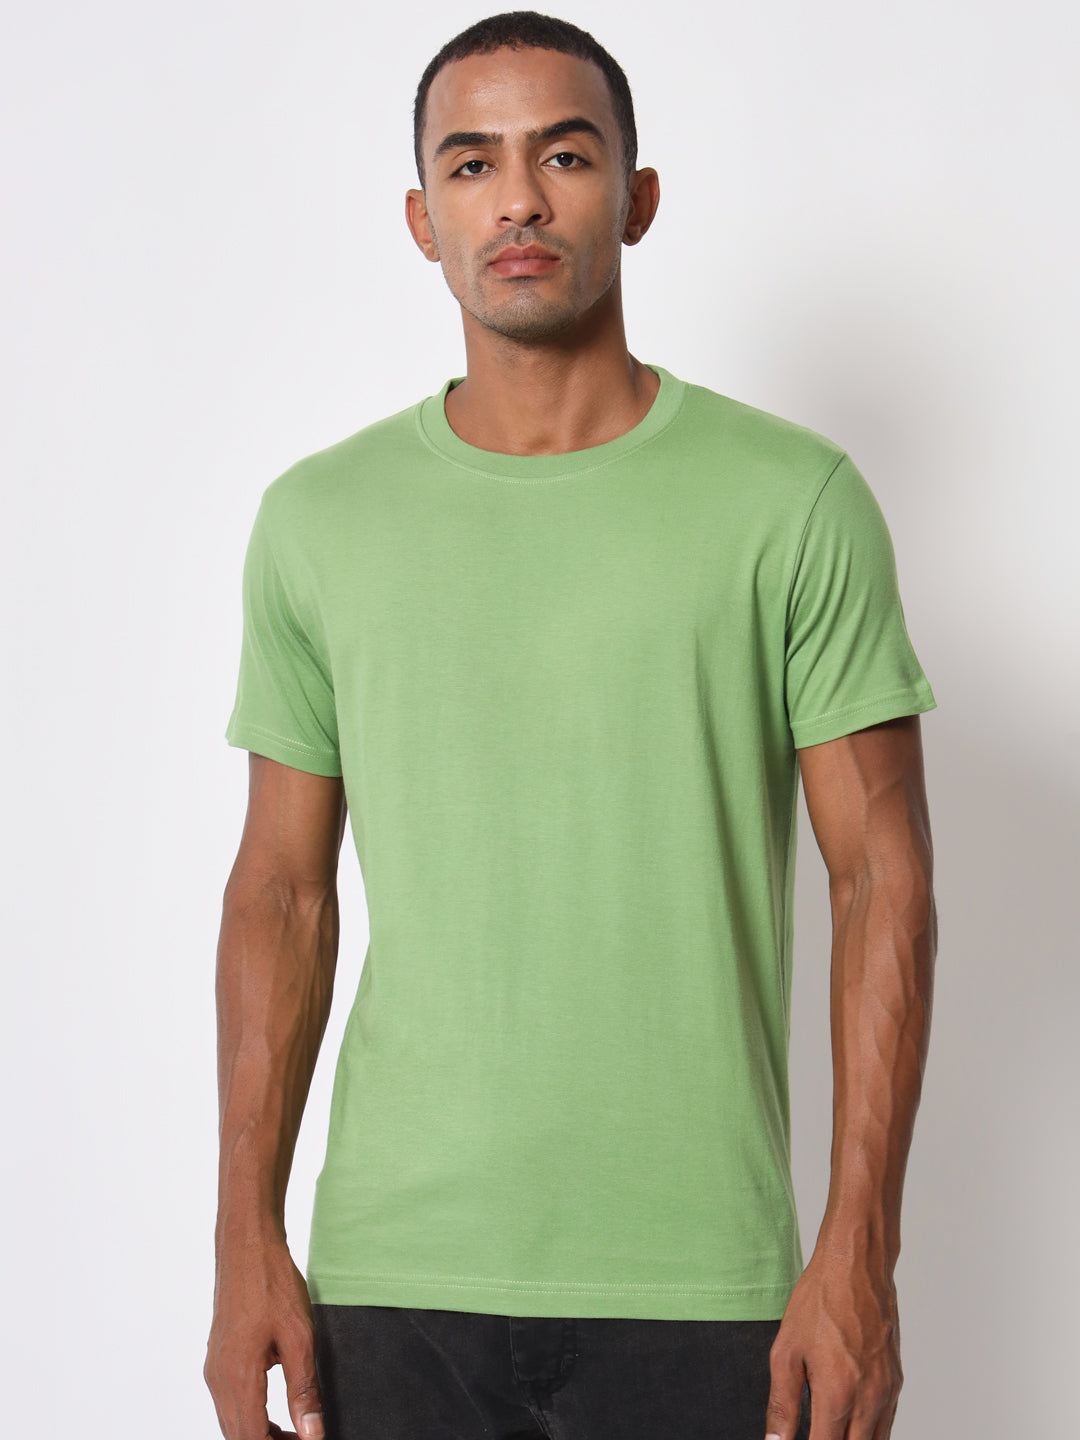 Kiwi Green Half Sleeve Men's Cotton T-shirt